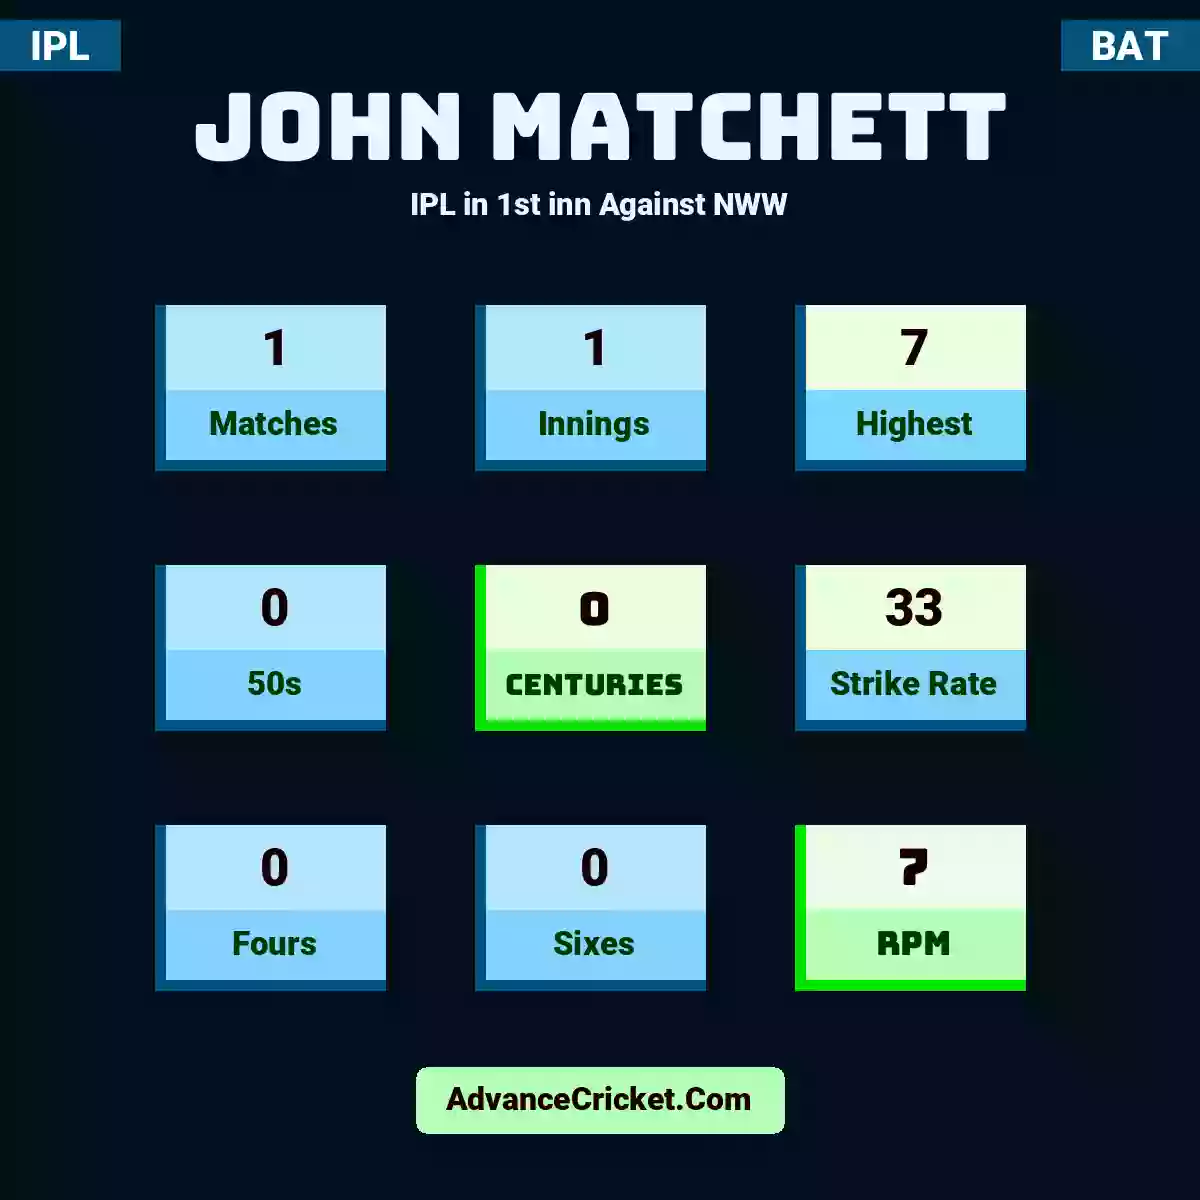 John Matchett IPL  in 1st inn Against NWW, John Matchett played 1 matches, scored 7 runs as highest, 0 half-centuries, and 0 centuries, with a strike rate of 33. J.Matchett hit 0 fours and 0 sixes, with an RPM of 7.